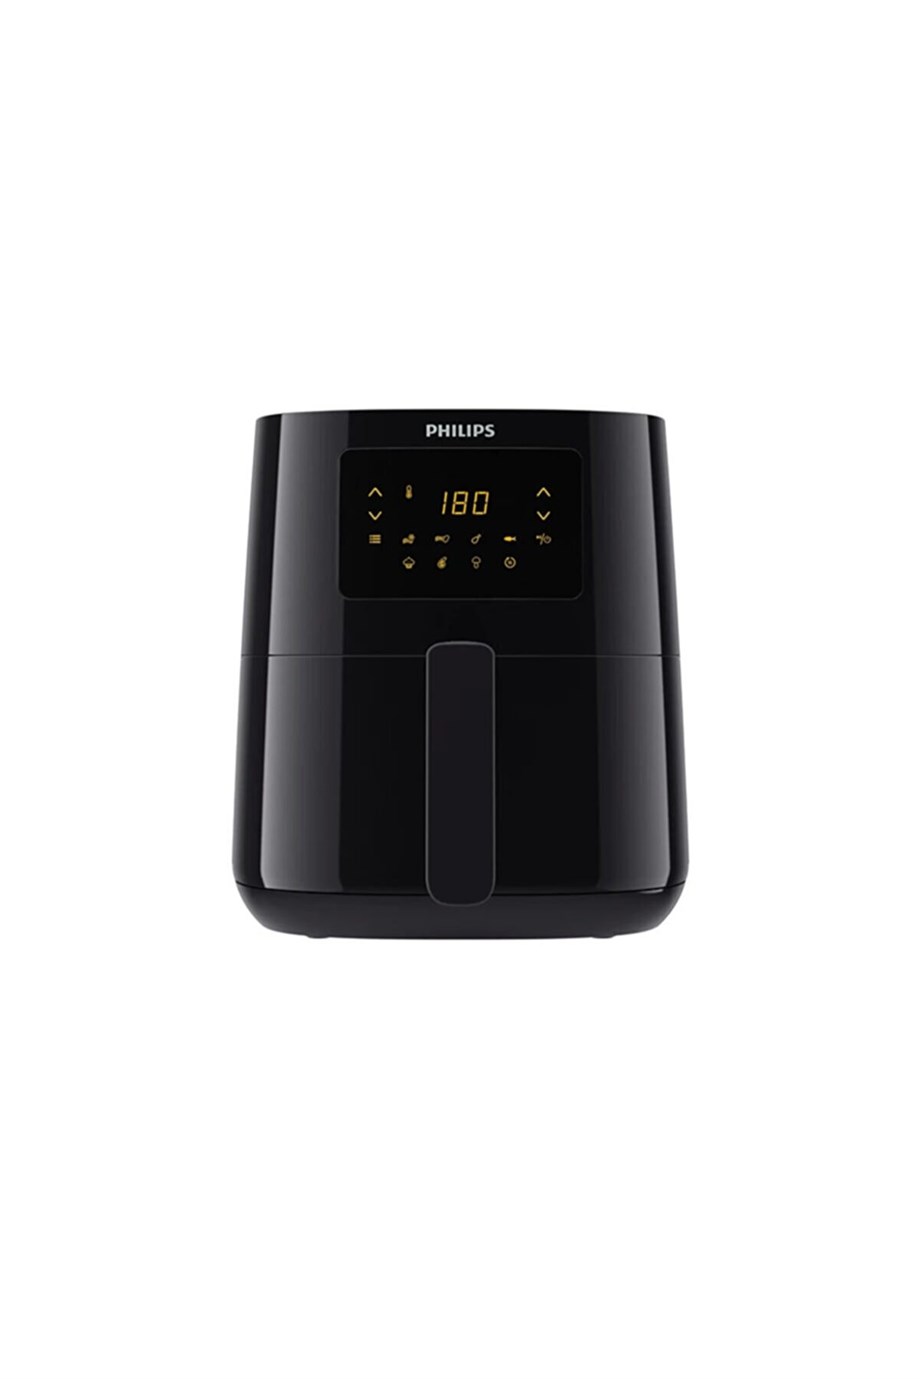 Philips Essential Airfryer HD9252/90 1400 W Fritöz En İyi Fiyat Avantajı  ile dtmexpress.com.tr de!